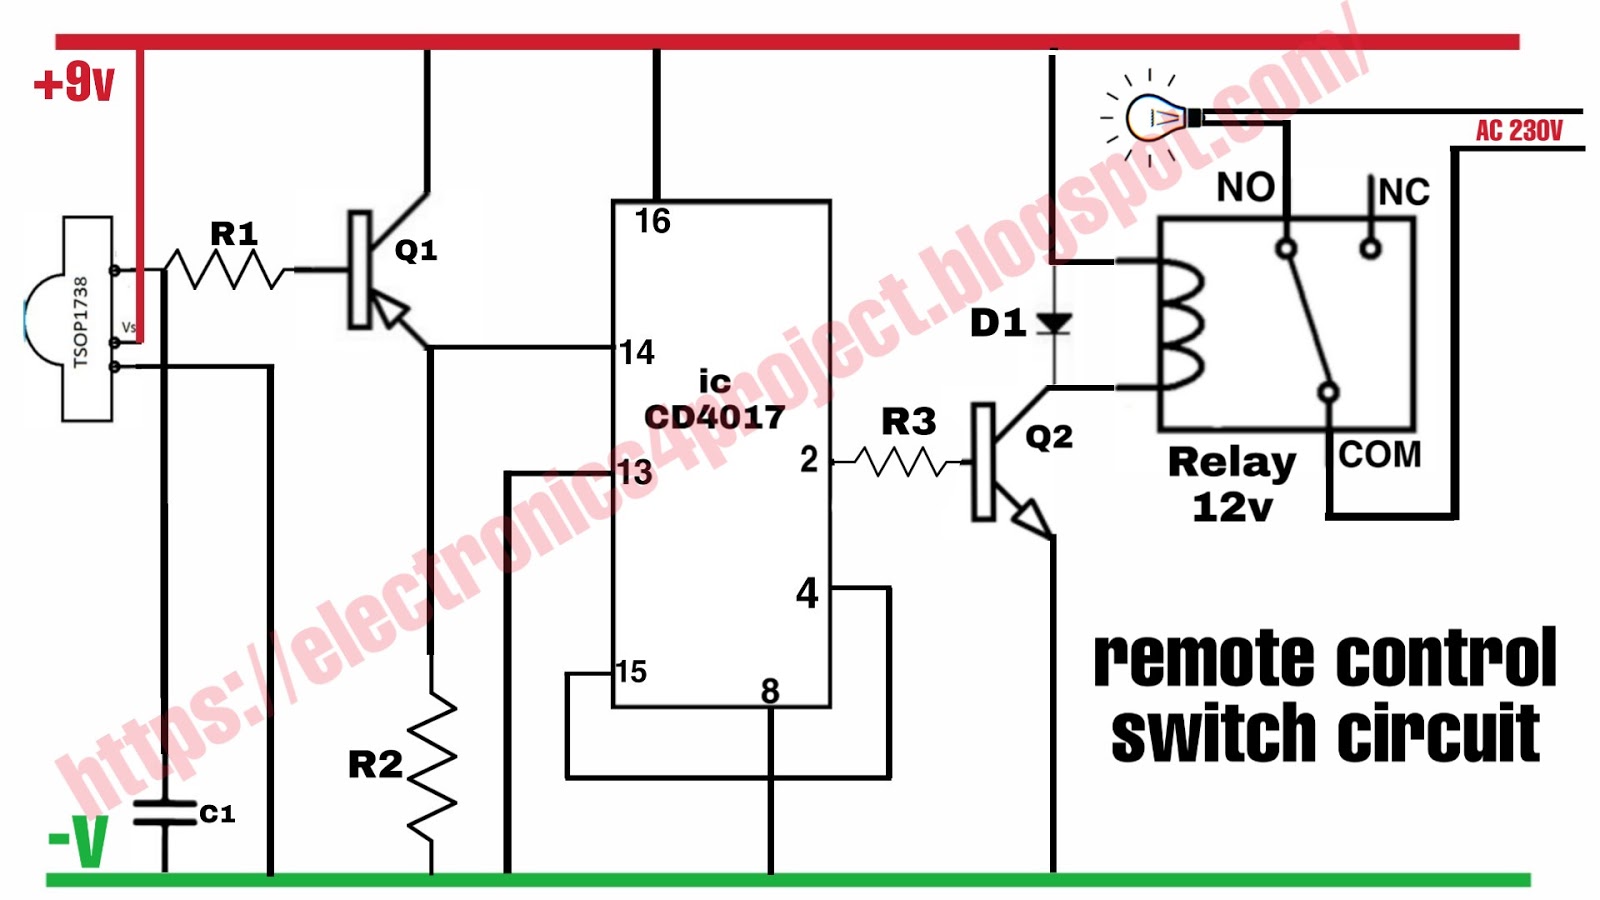 remote control switch circuit diagram